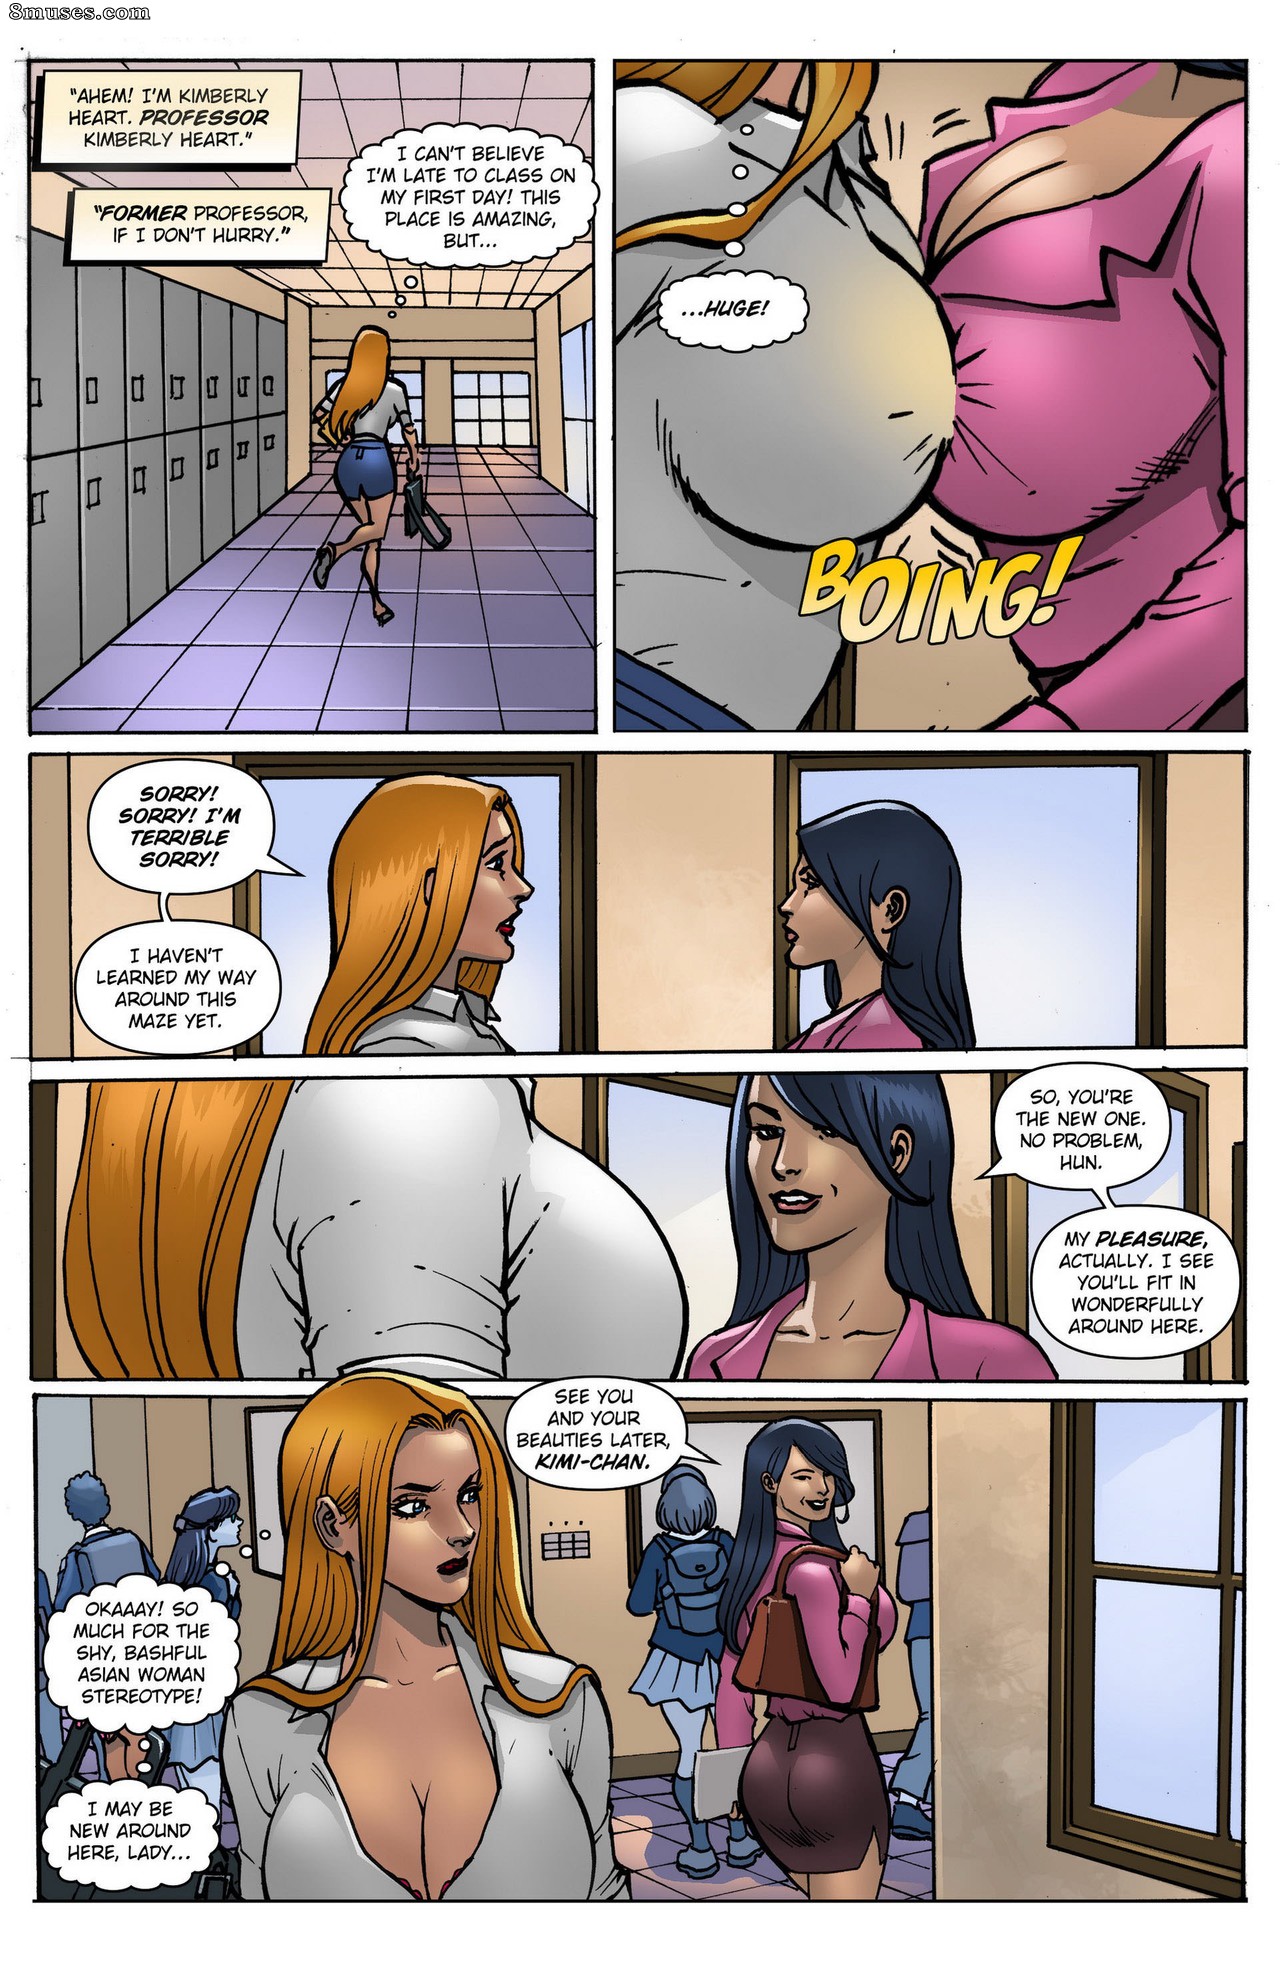 Cartoon Punish Porn - Punishment School Issue 1 - 8muses Comics - Sex Comics and Porn Cartoons